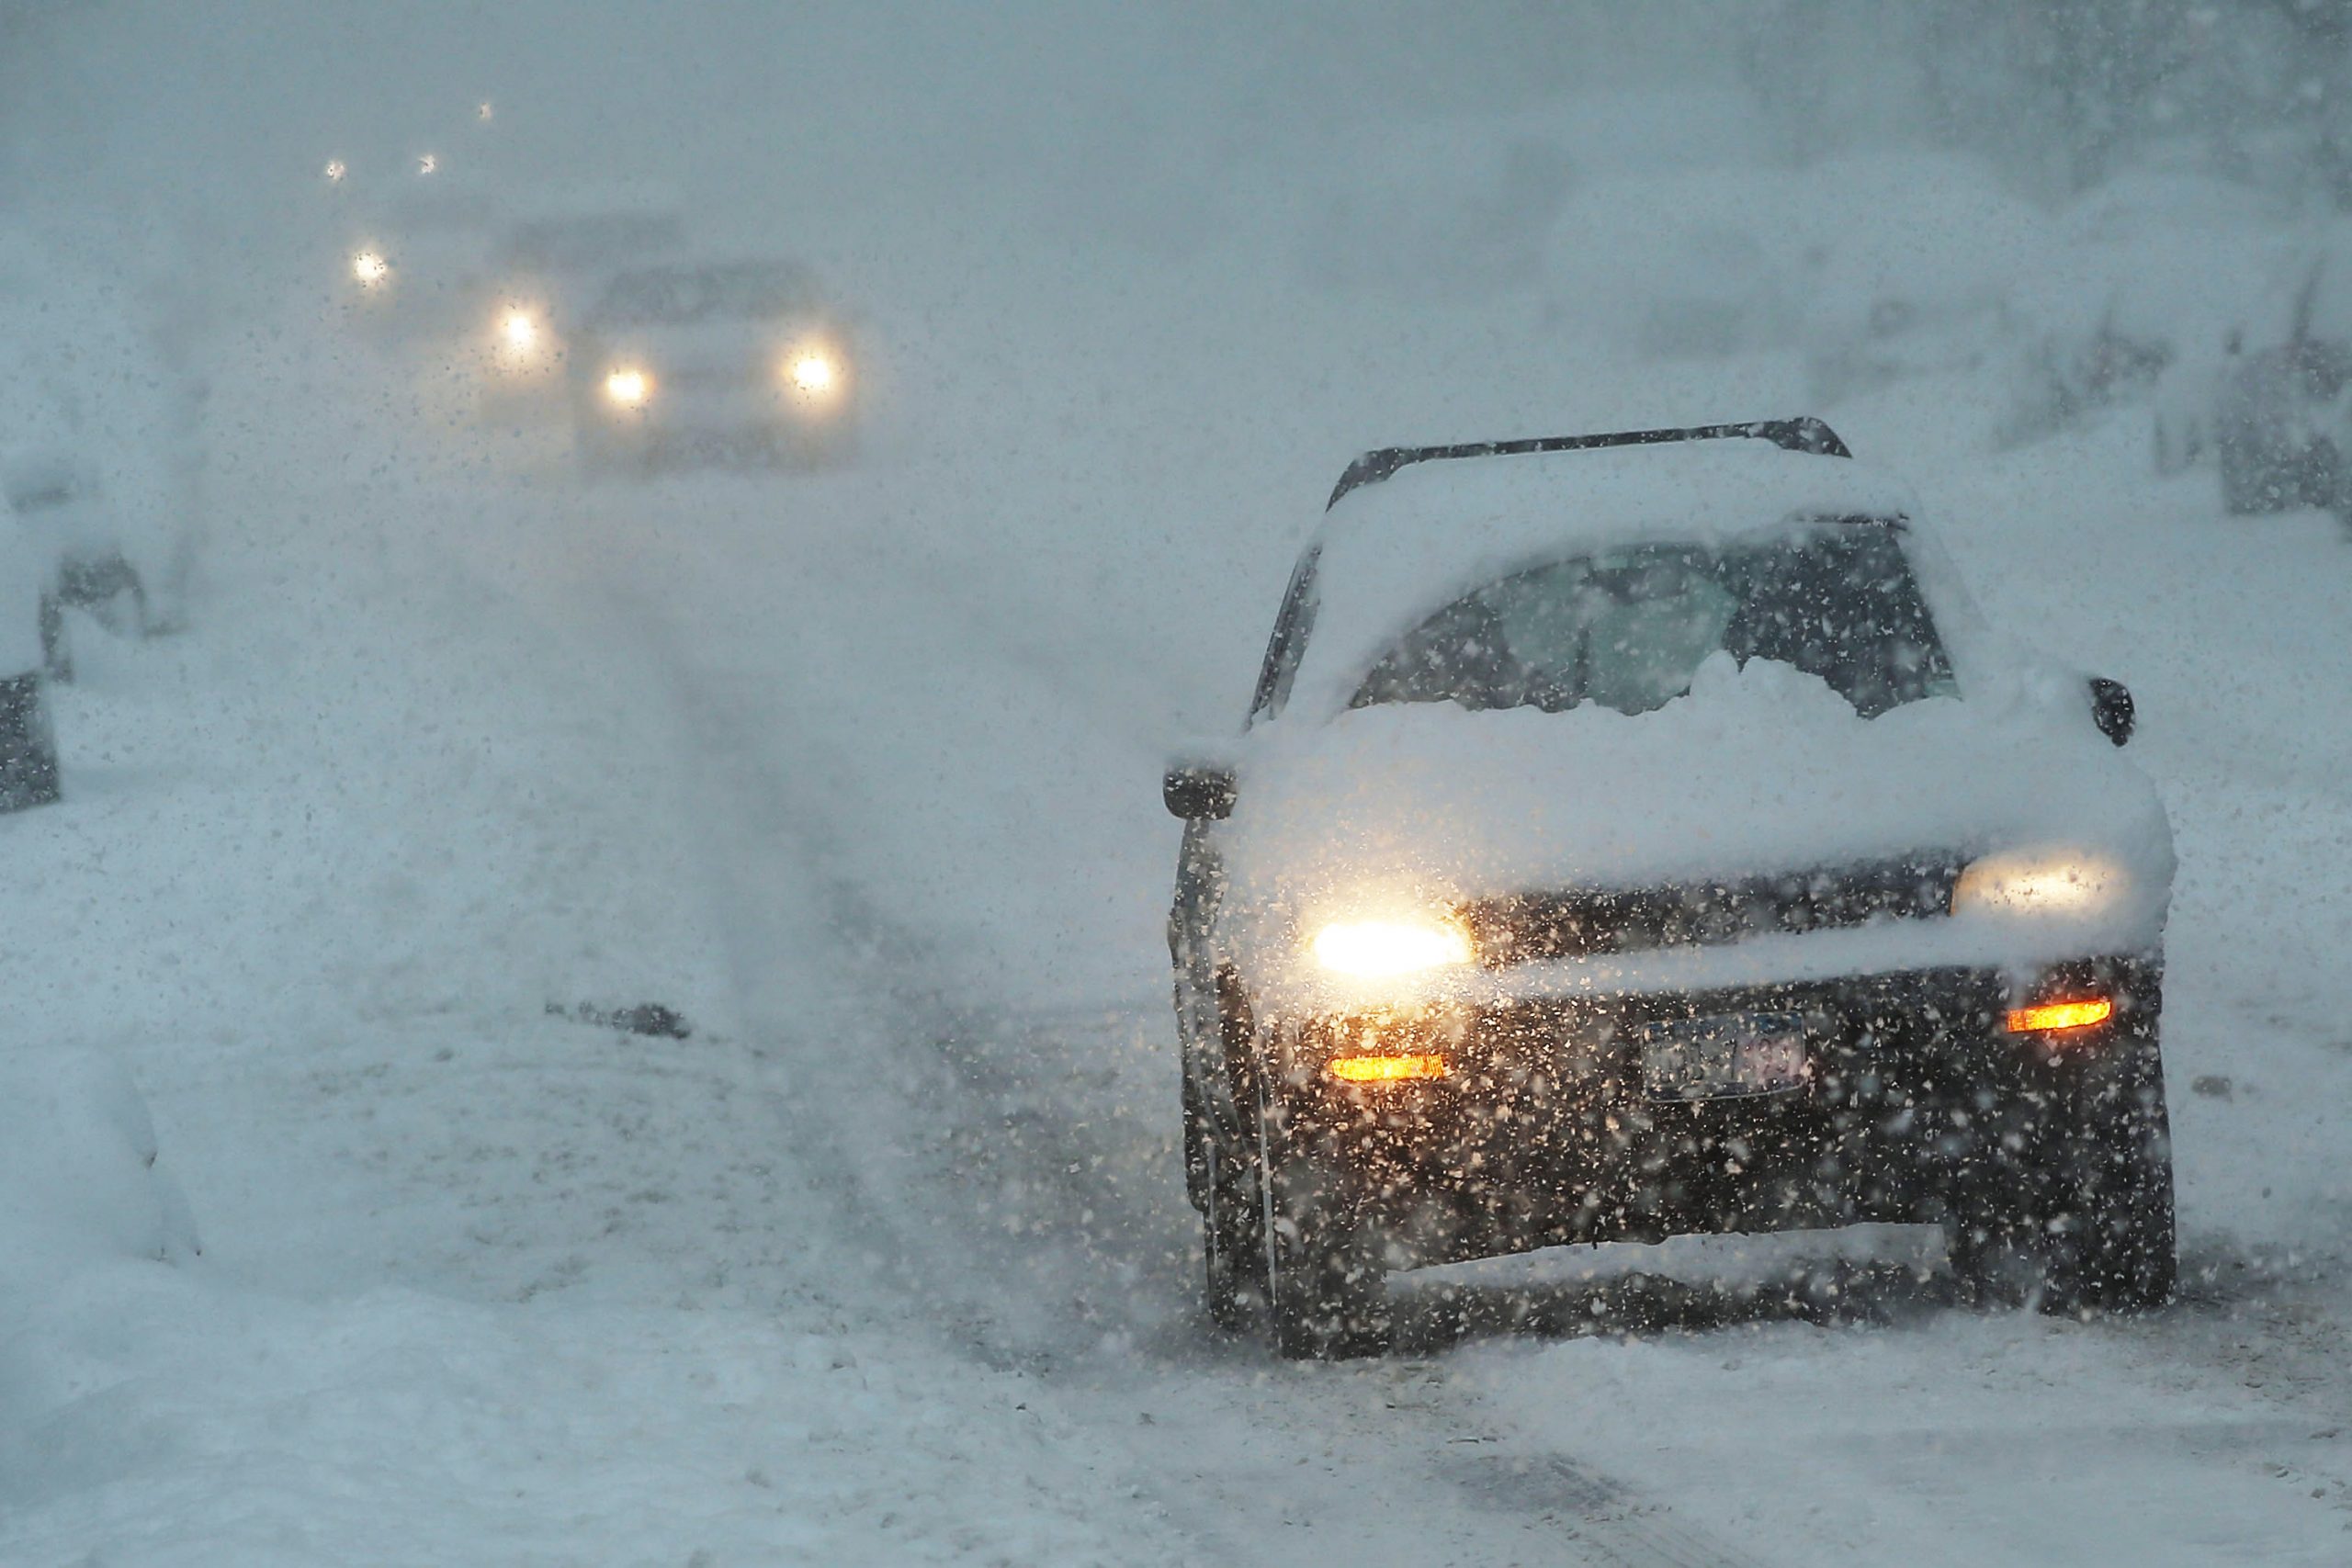 A car wades cautiously through a viscous blizzard in New York